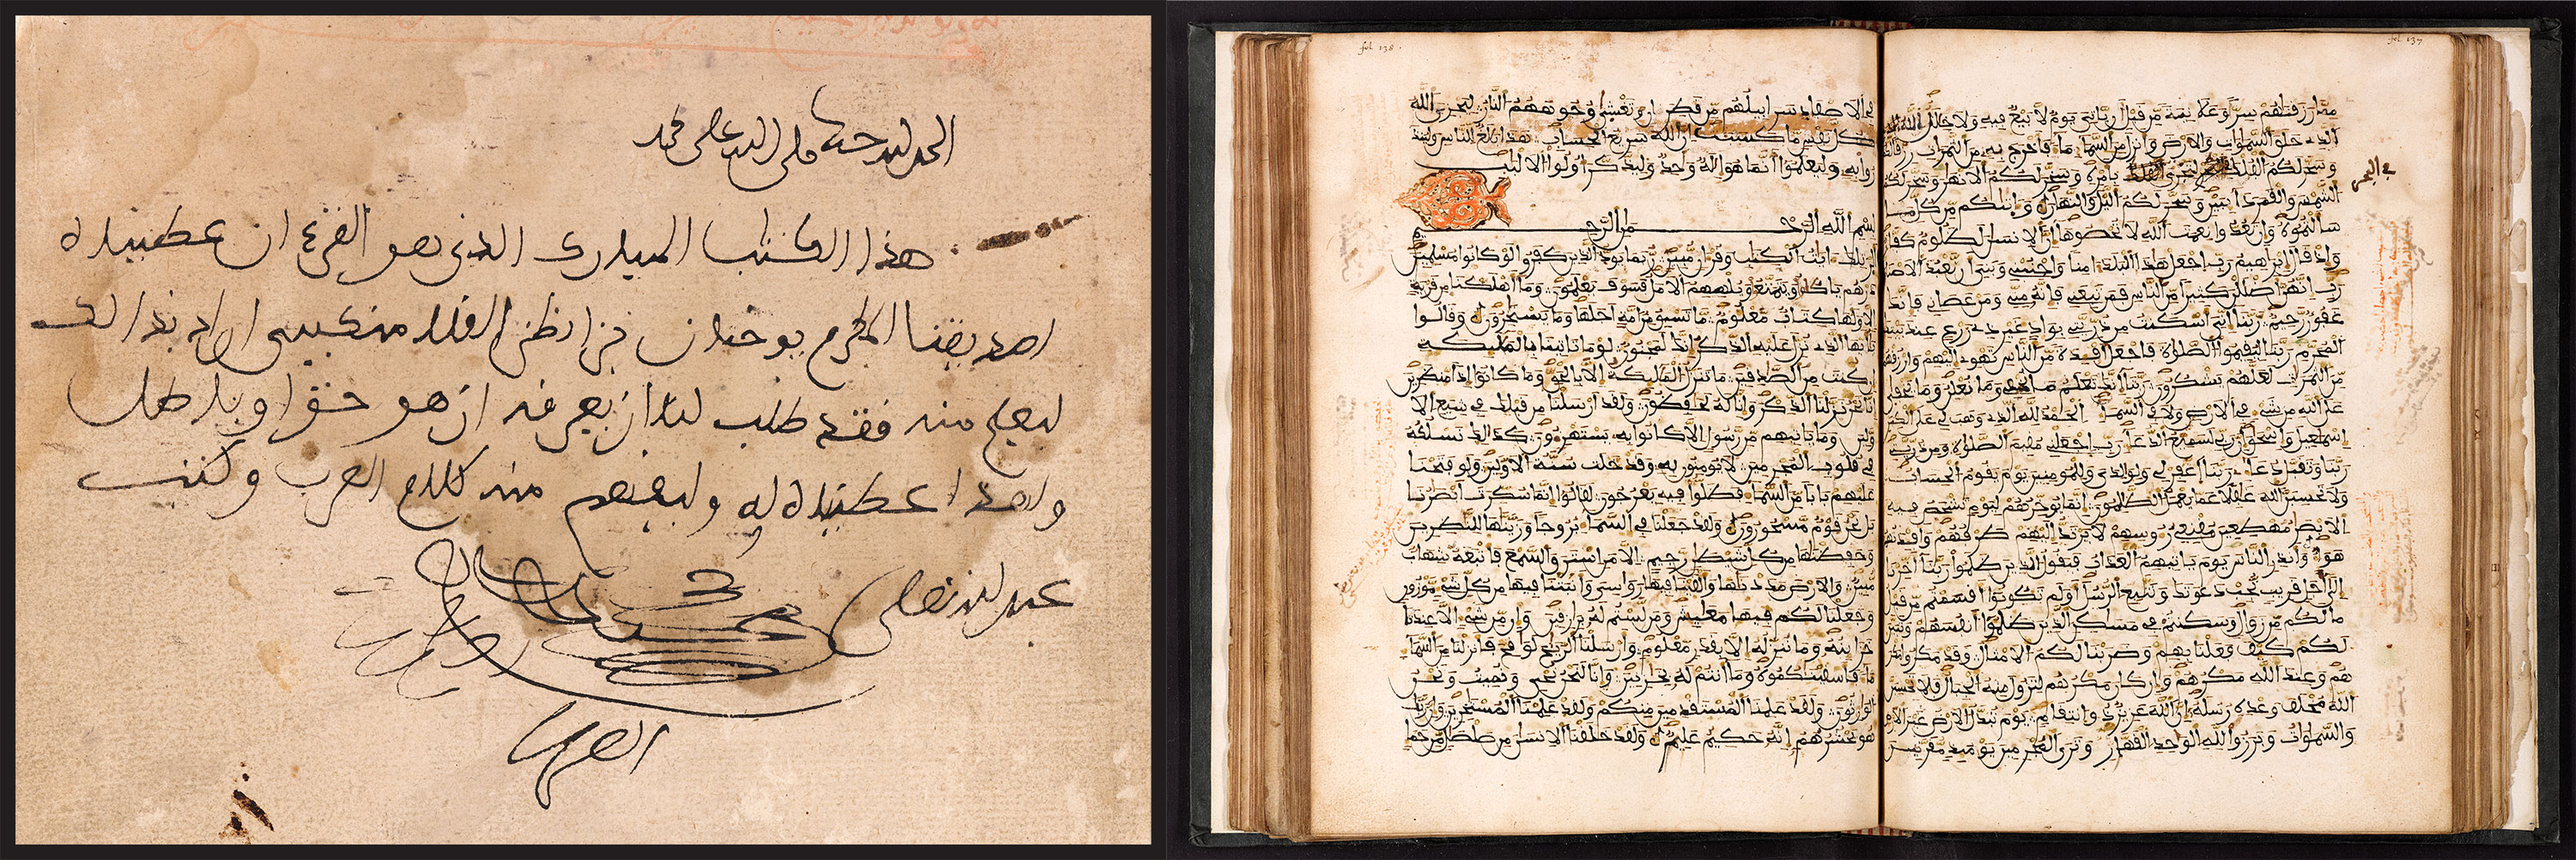 Koran, Maghrib, 16th century